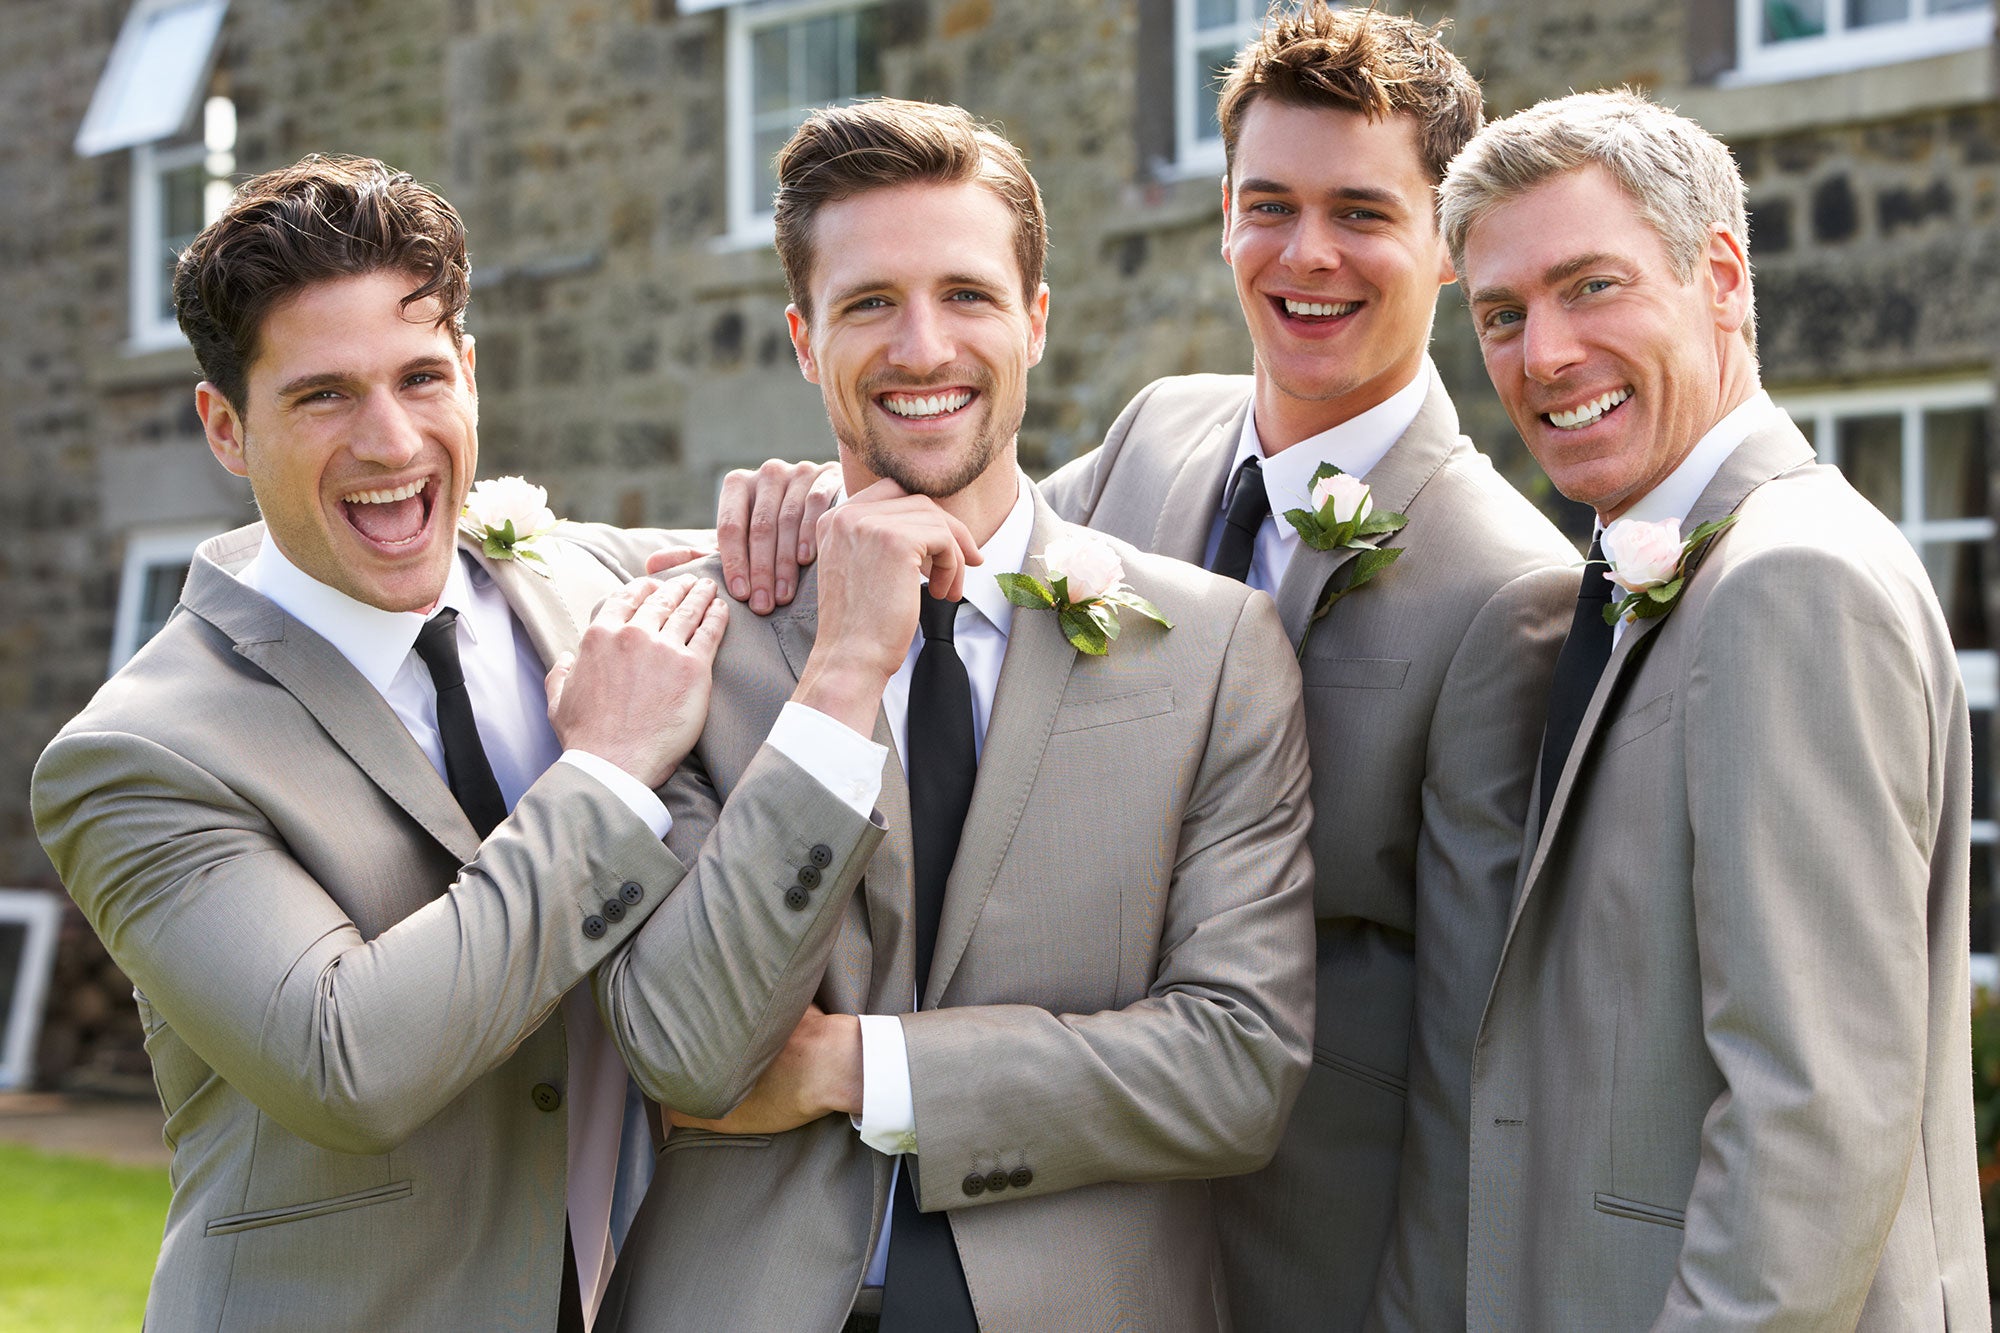 The groom and groomsmen in matching motif satin ties